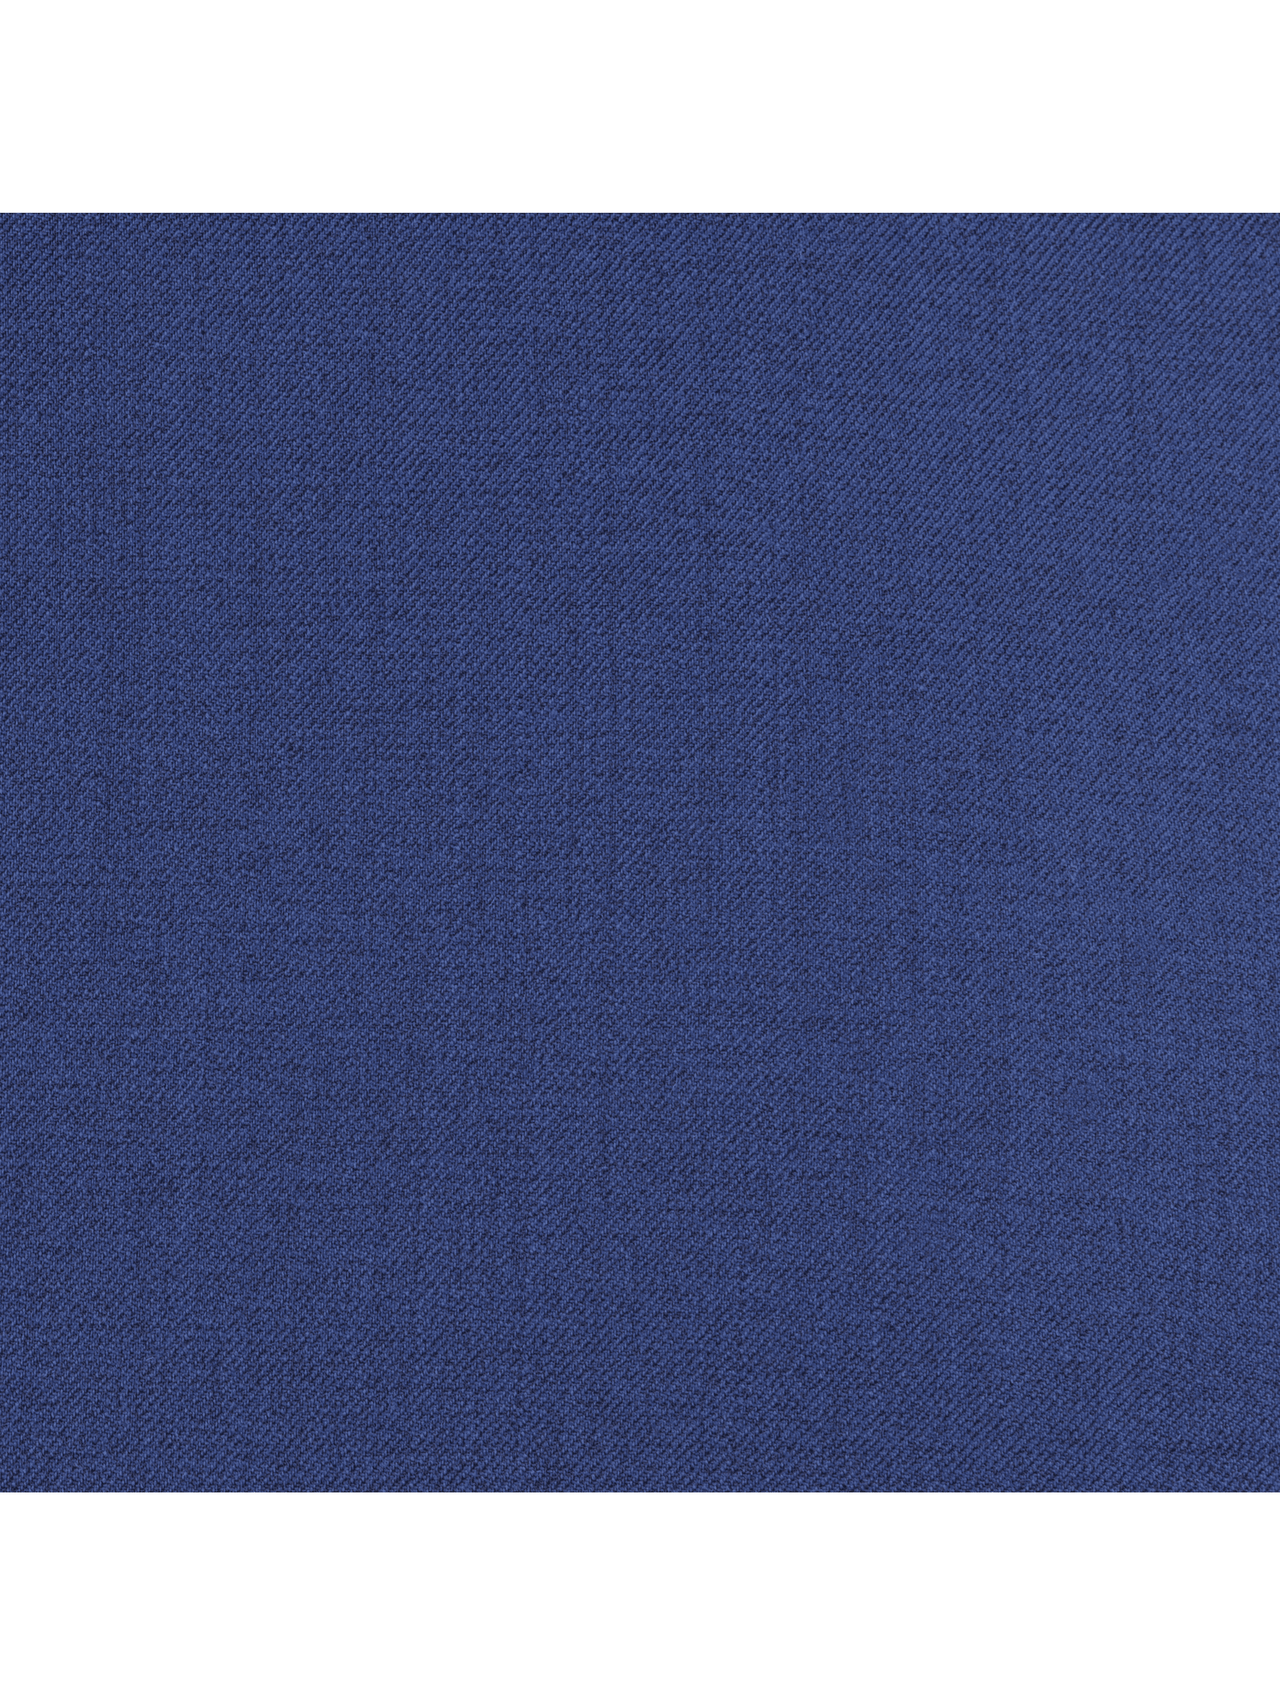 close up of dark blue gabardine fabric